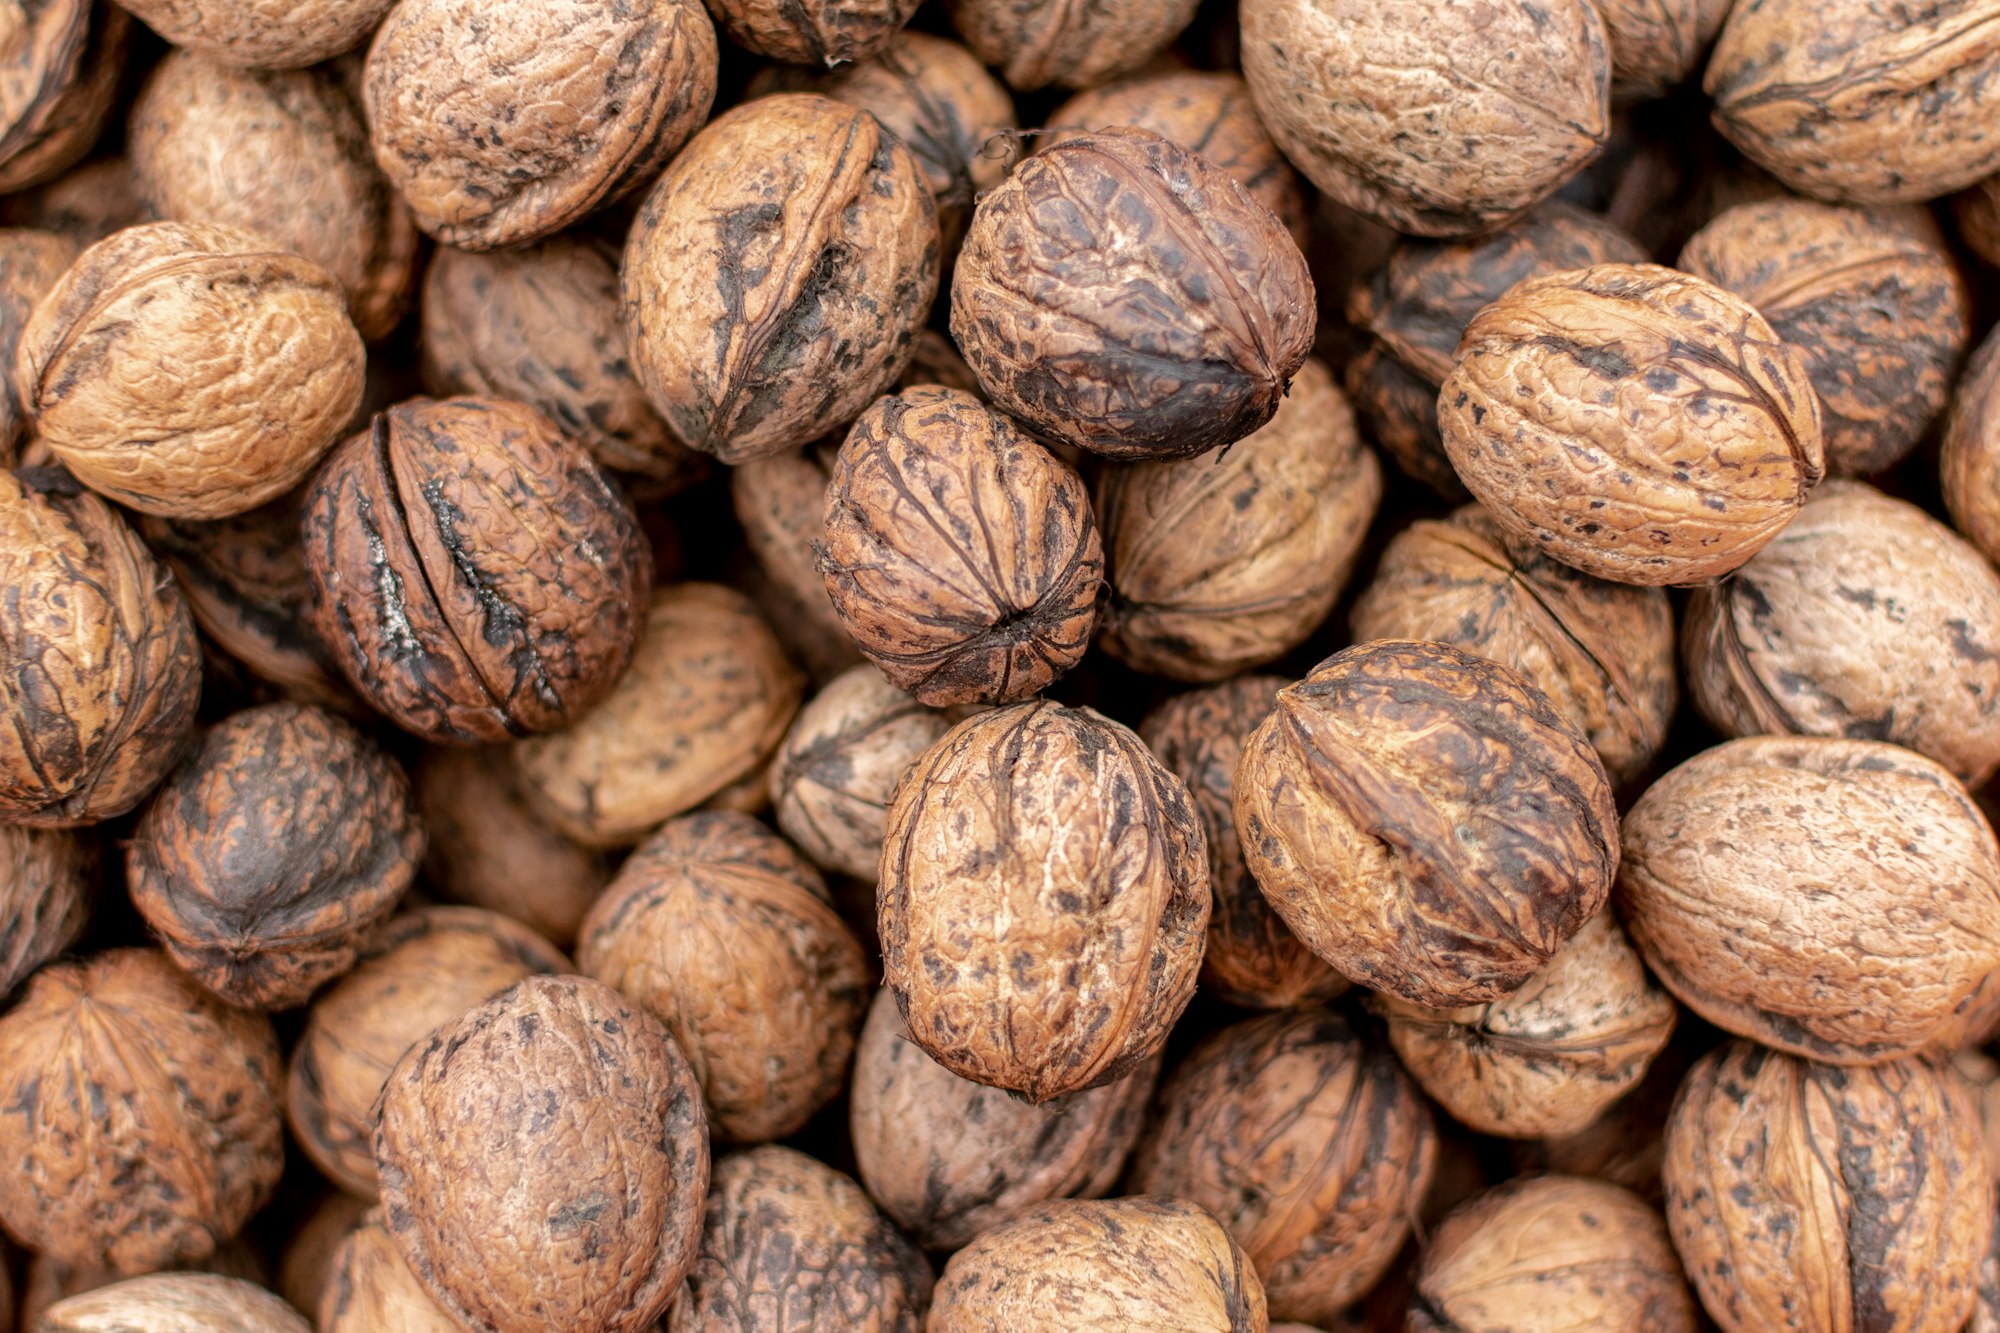 The beauty of walnuts…